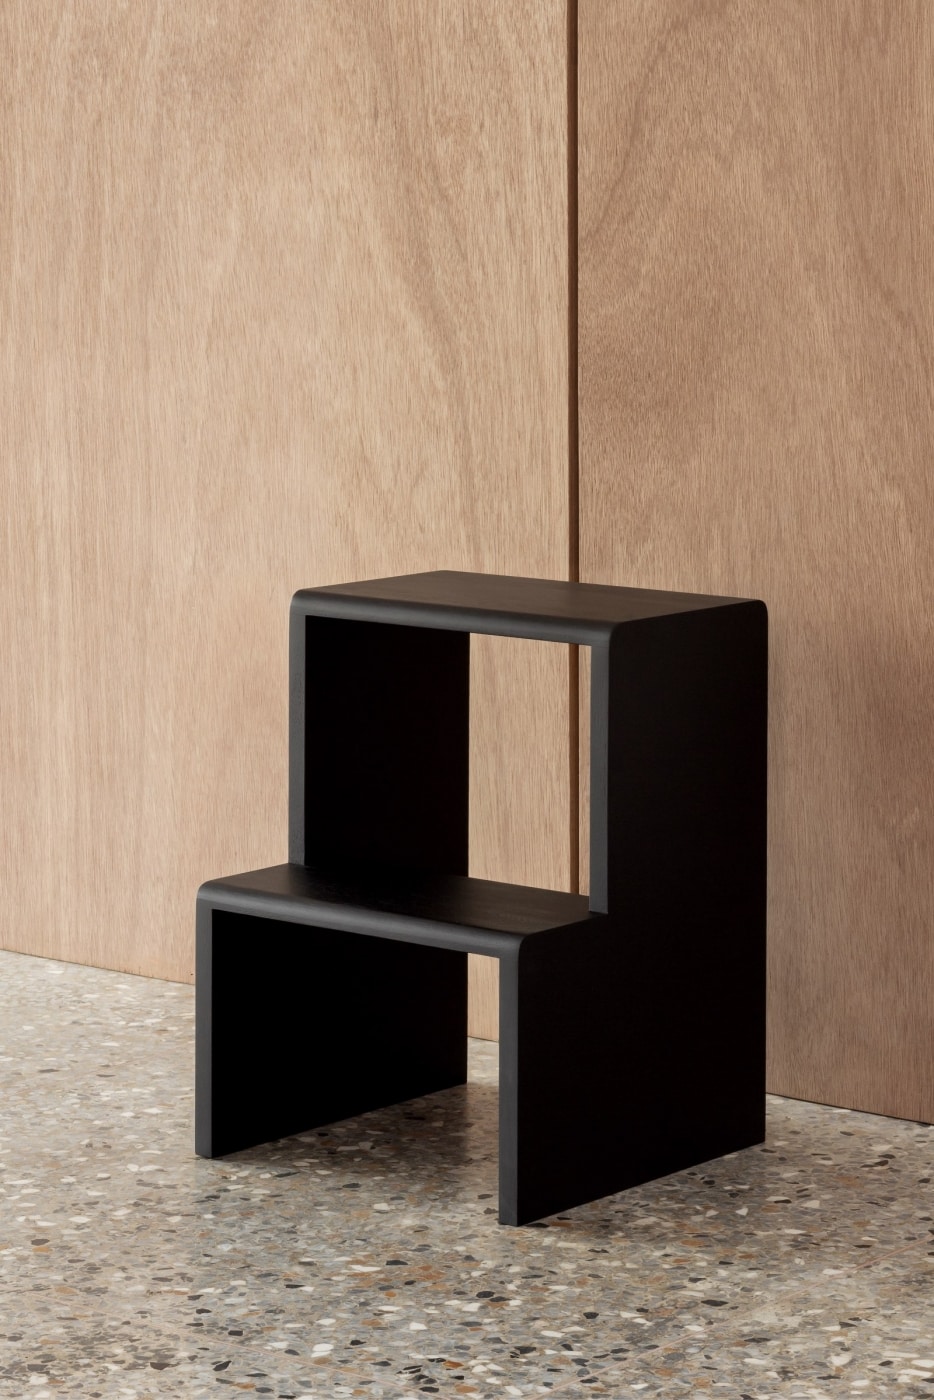 Furniture Design by London Studio Mentsen 15